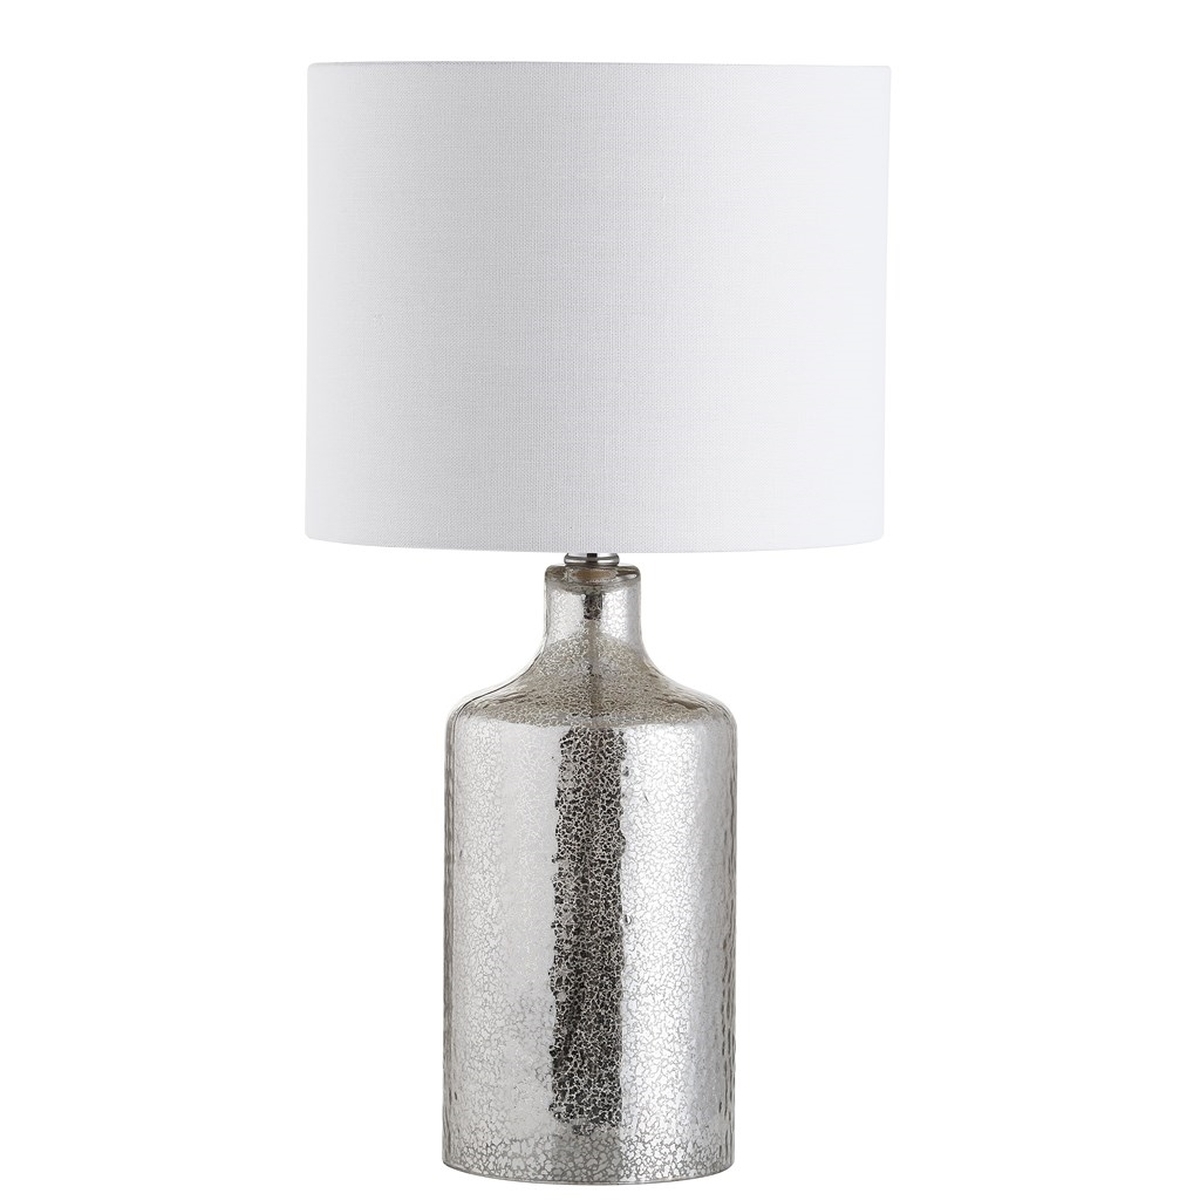 Danaris Table Lamp - Silver/Ivory - Arlo Home - Image 0